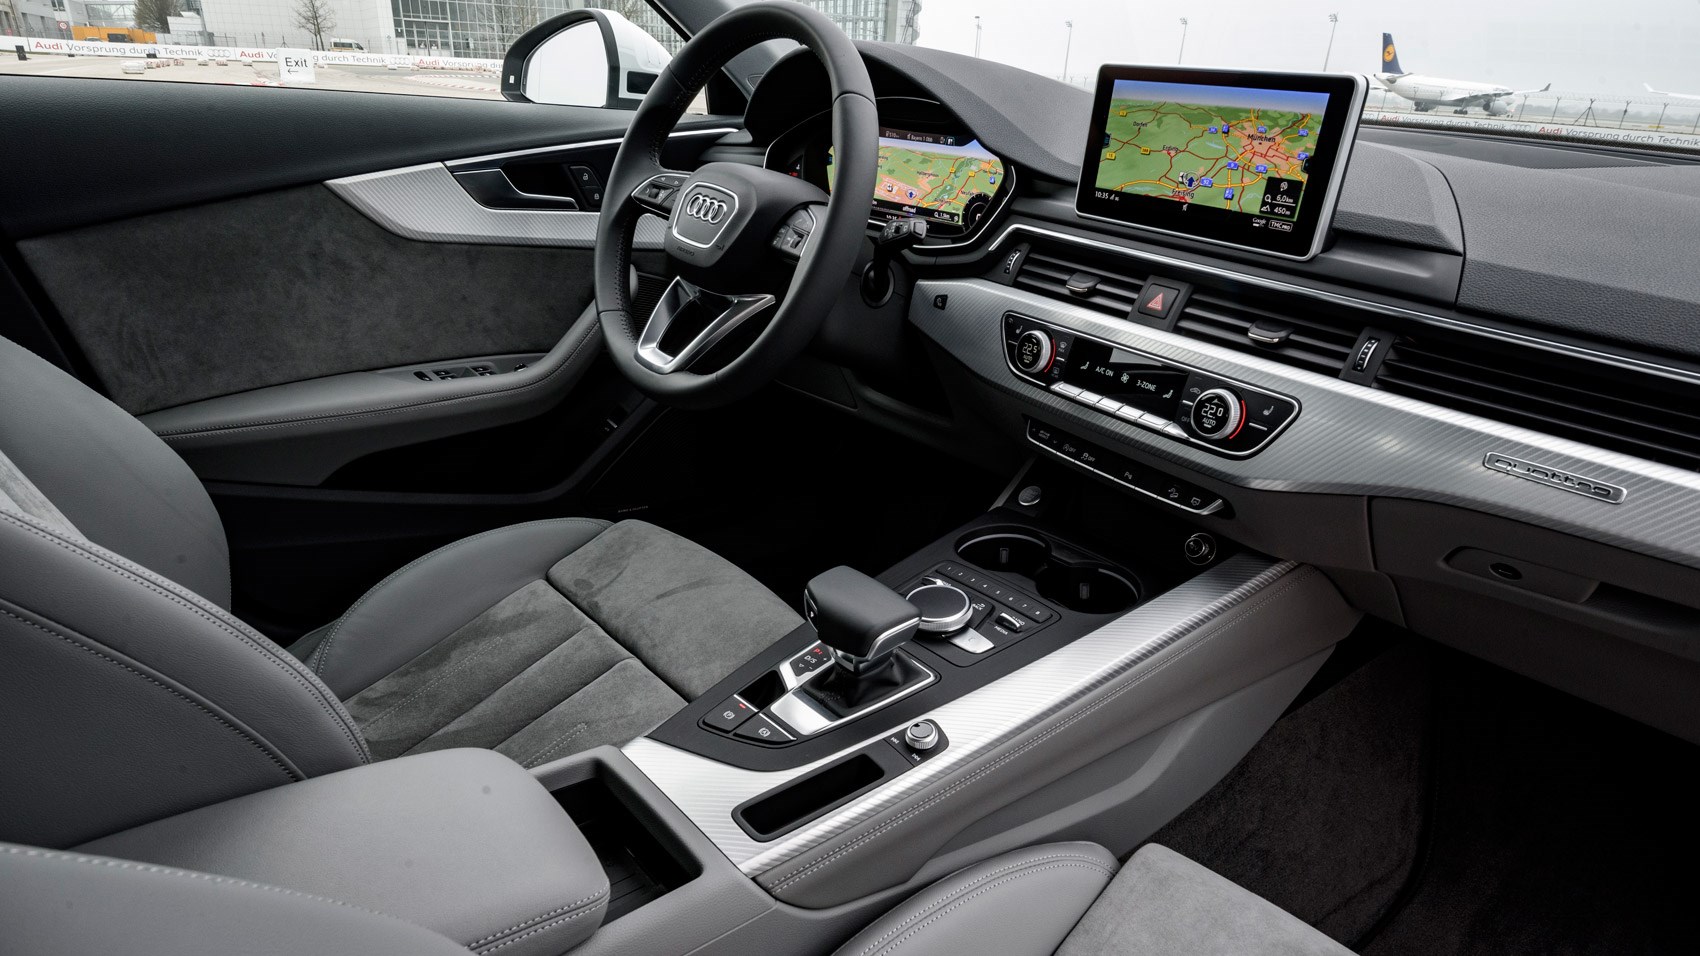 Audi A4 Allroad 2 0 Tfsi Quattro 2016 Review Car Magazine